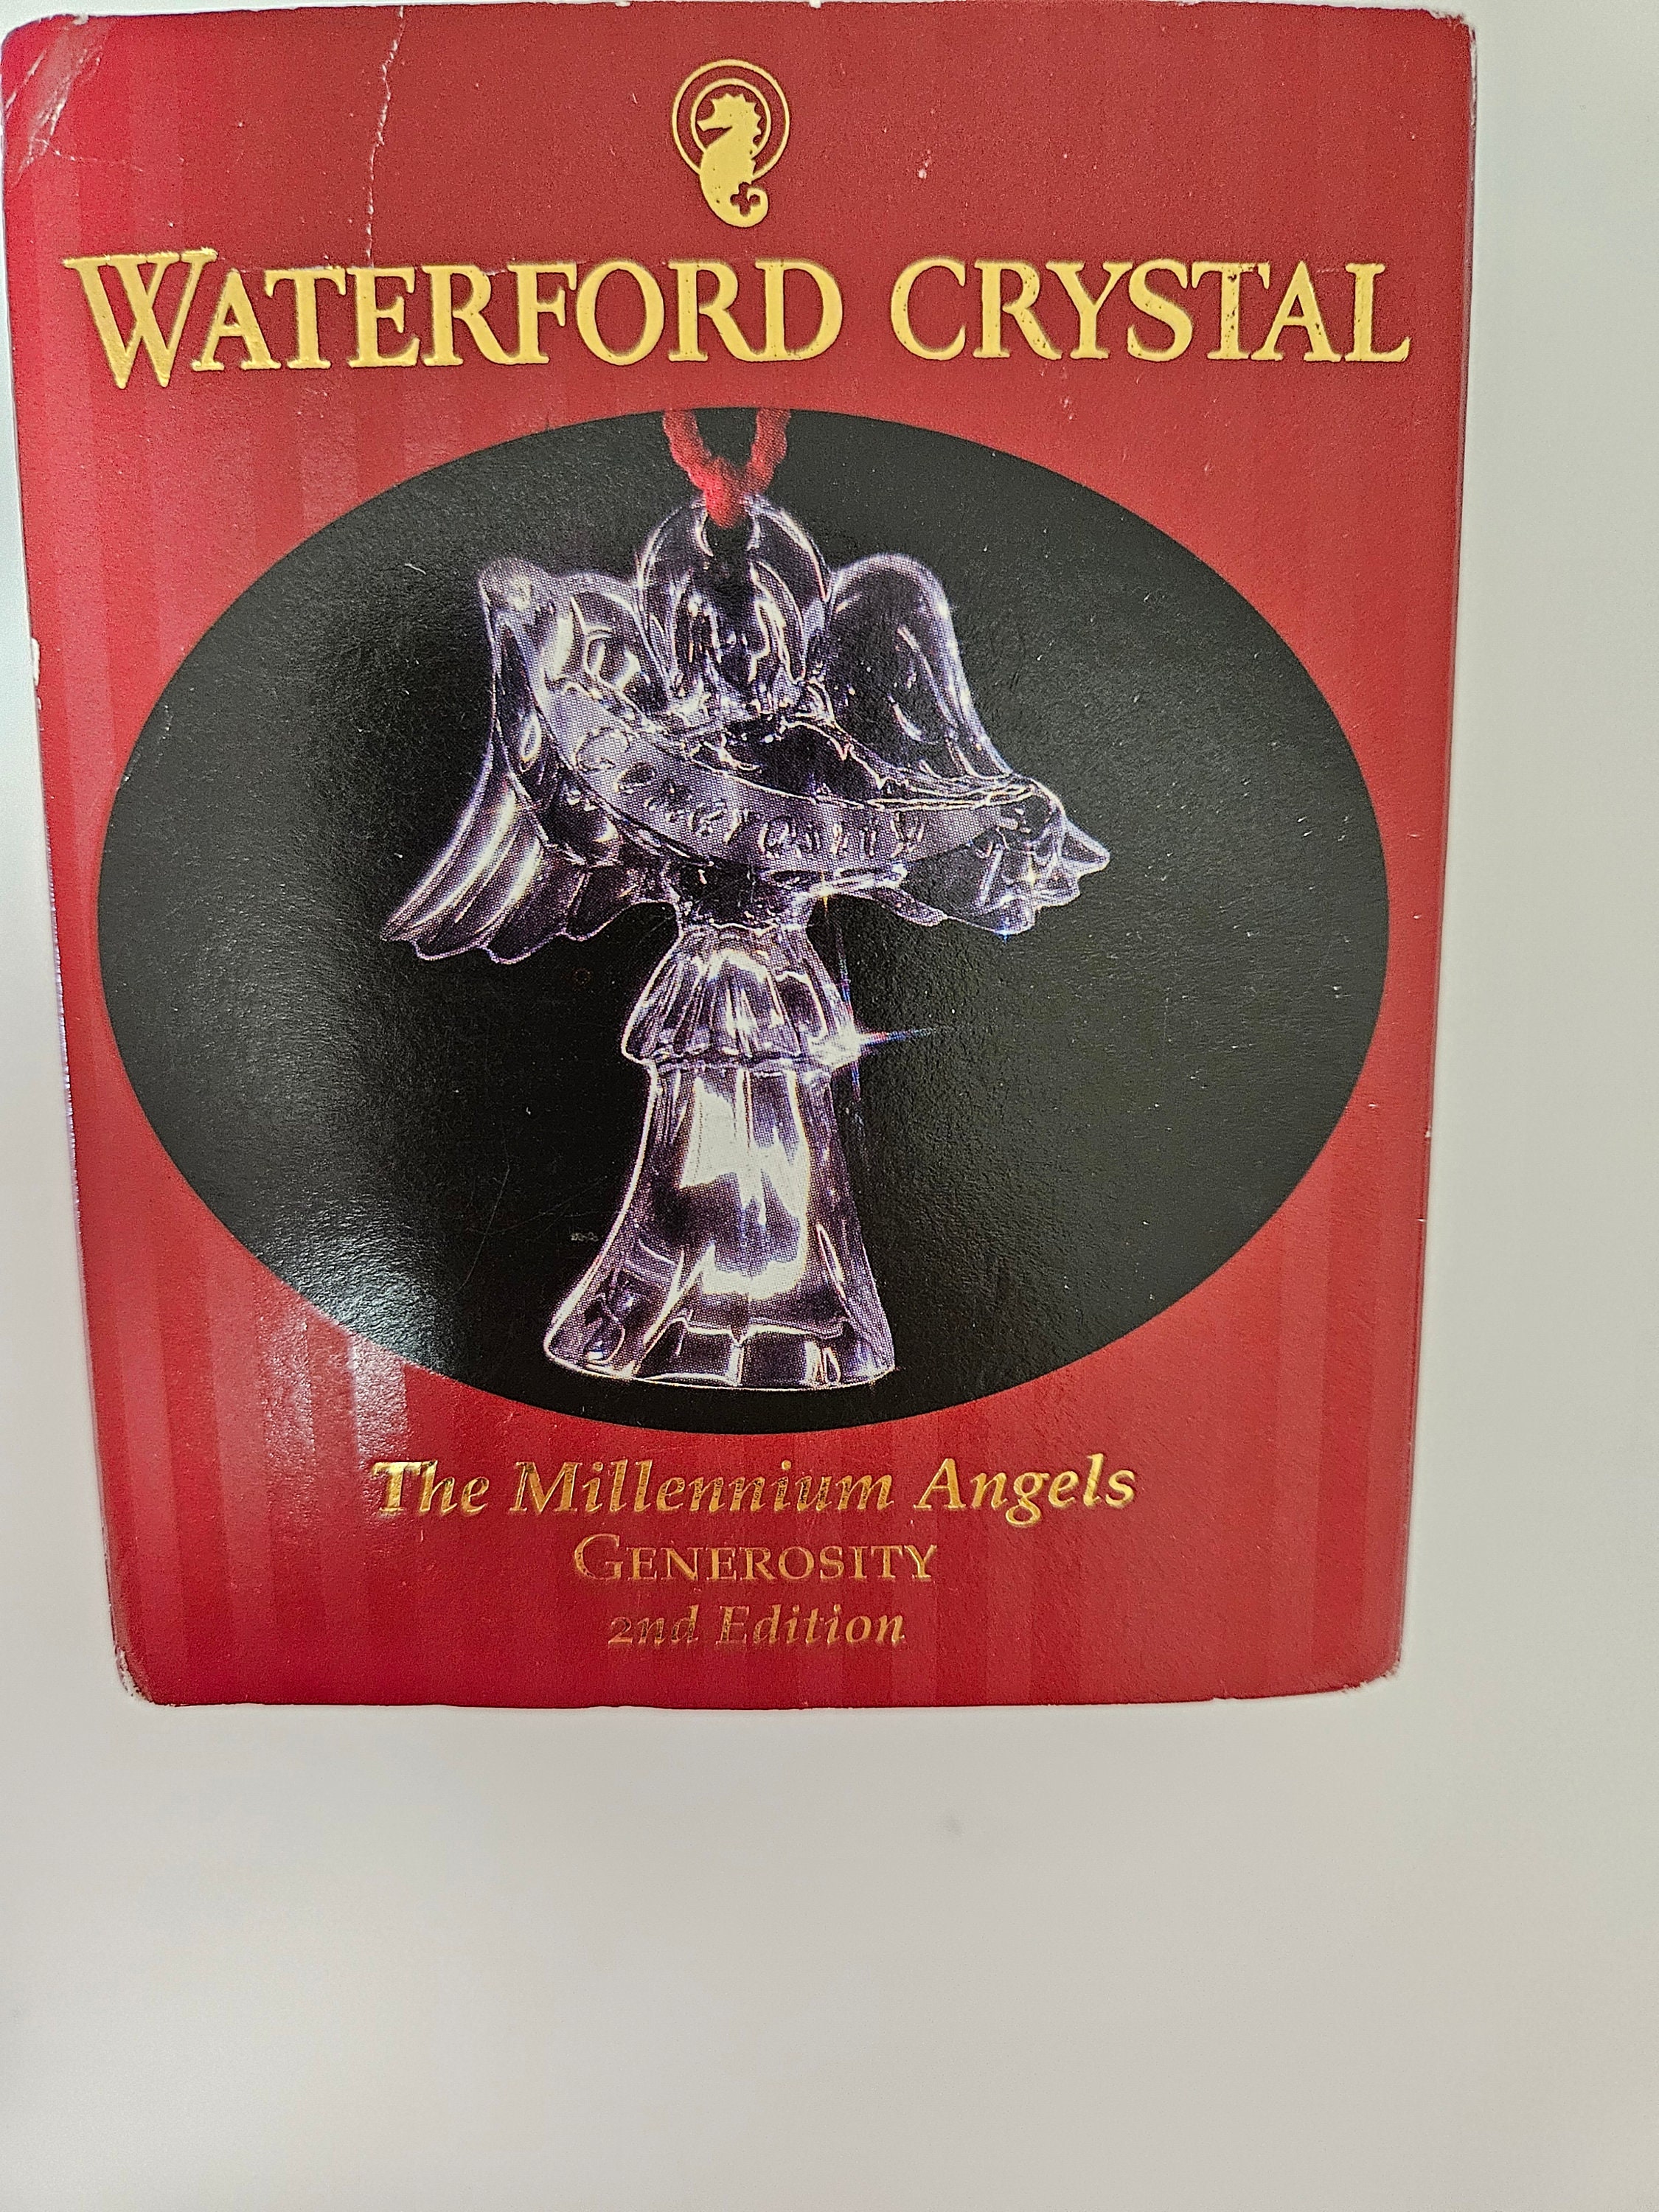 Waterford Mini Snowflake Crystal Ornament